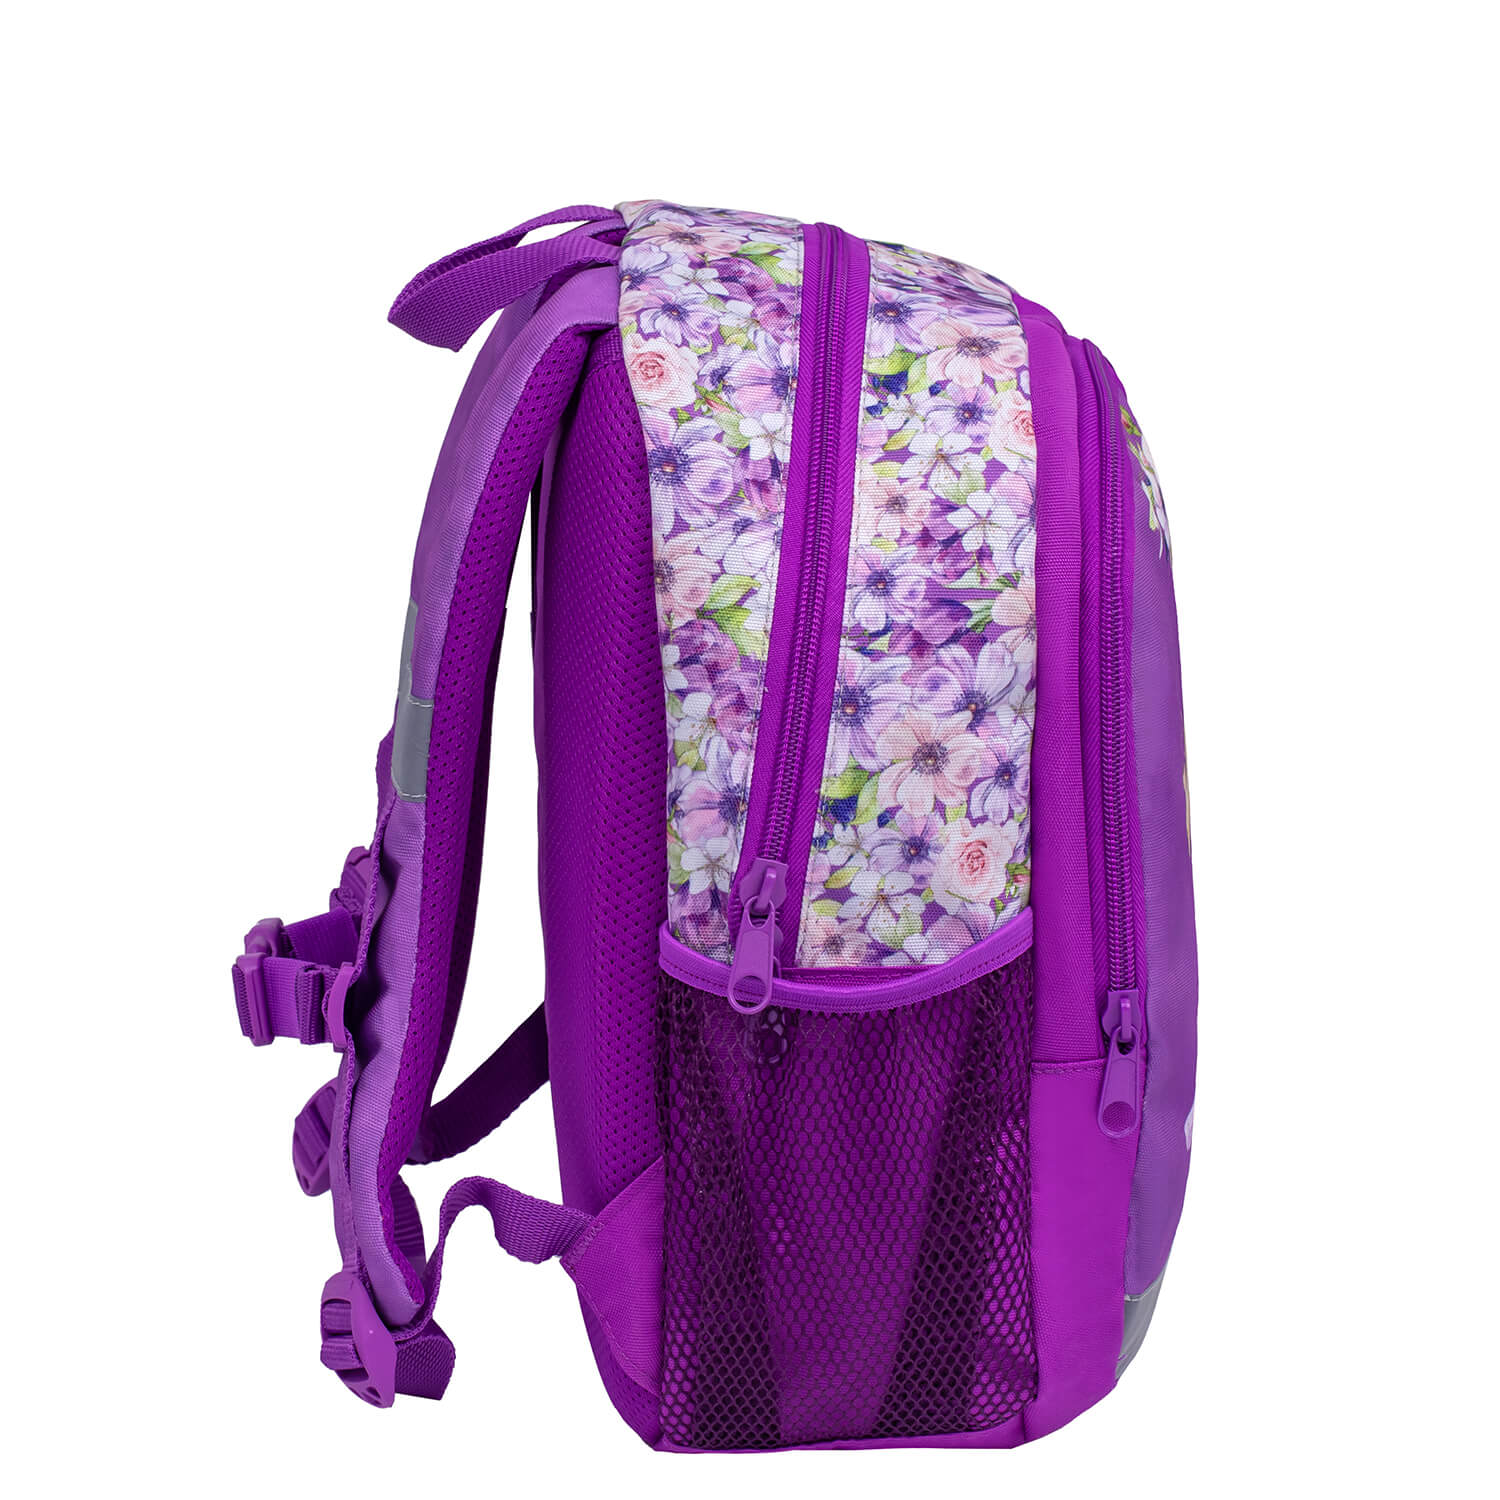 Kiddy Plus Princess Kindergarten Bag with GRATIS Storage box